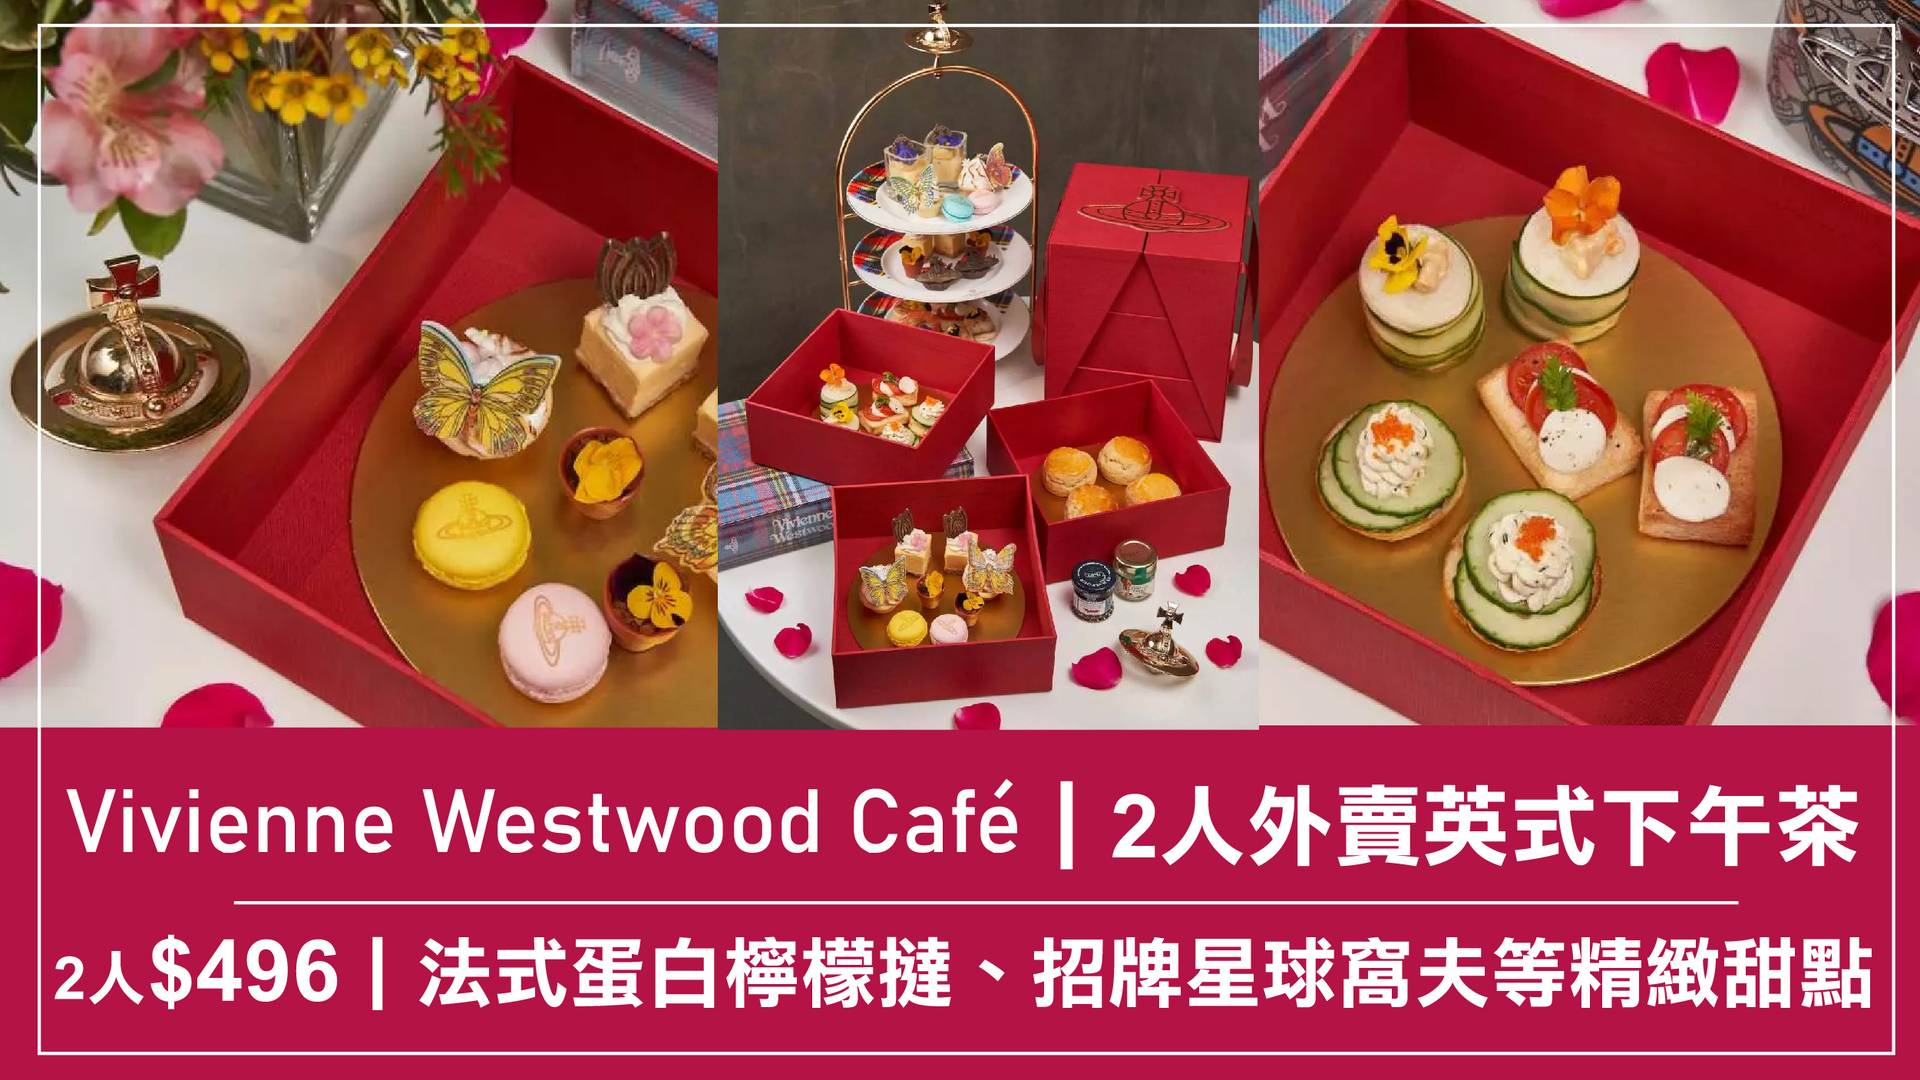 Vivienne Westwood Café 2人外賣英式下午茶｜法式蛋白檸檬撻、招牌星球窩夫等精緻甜點（需3個工作天前預訂）